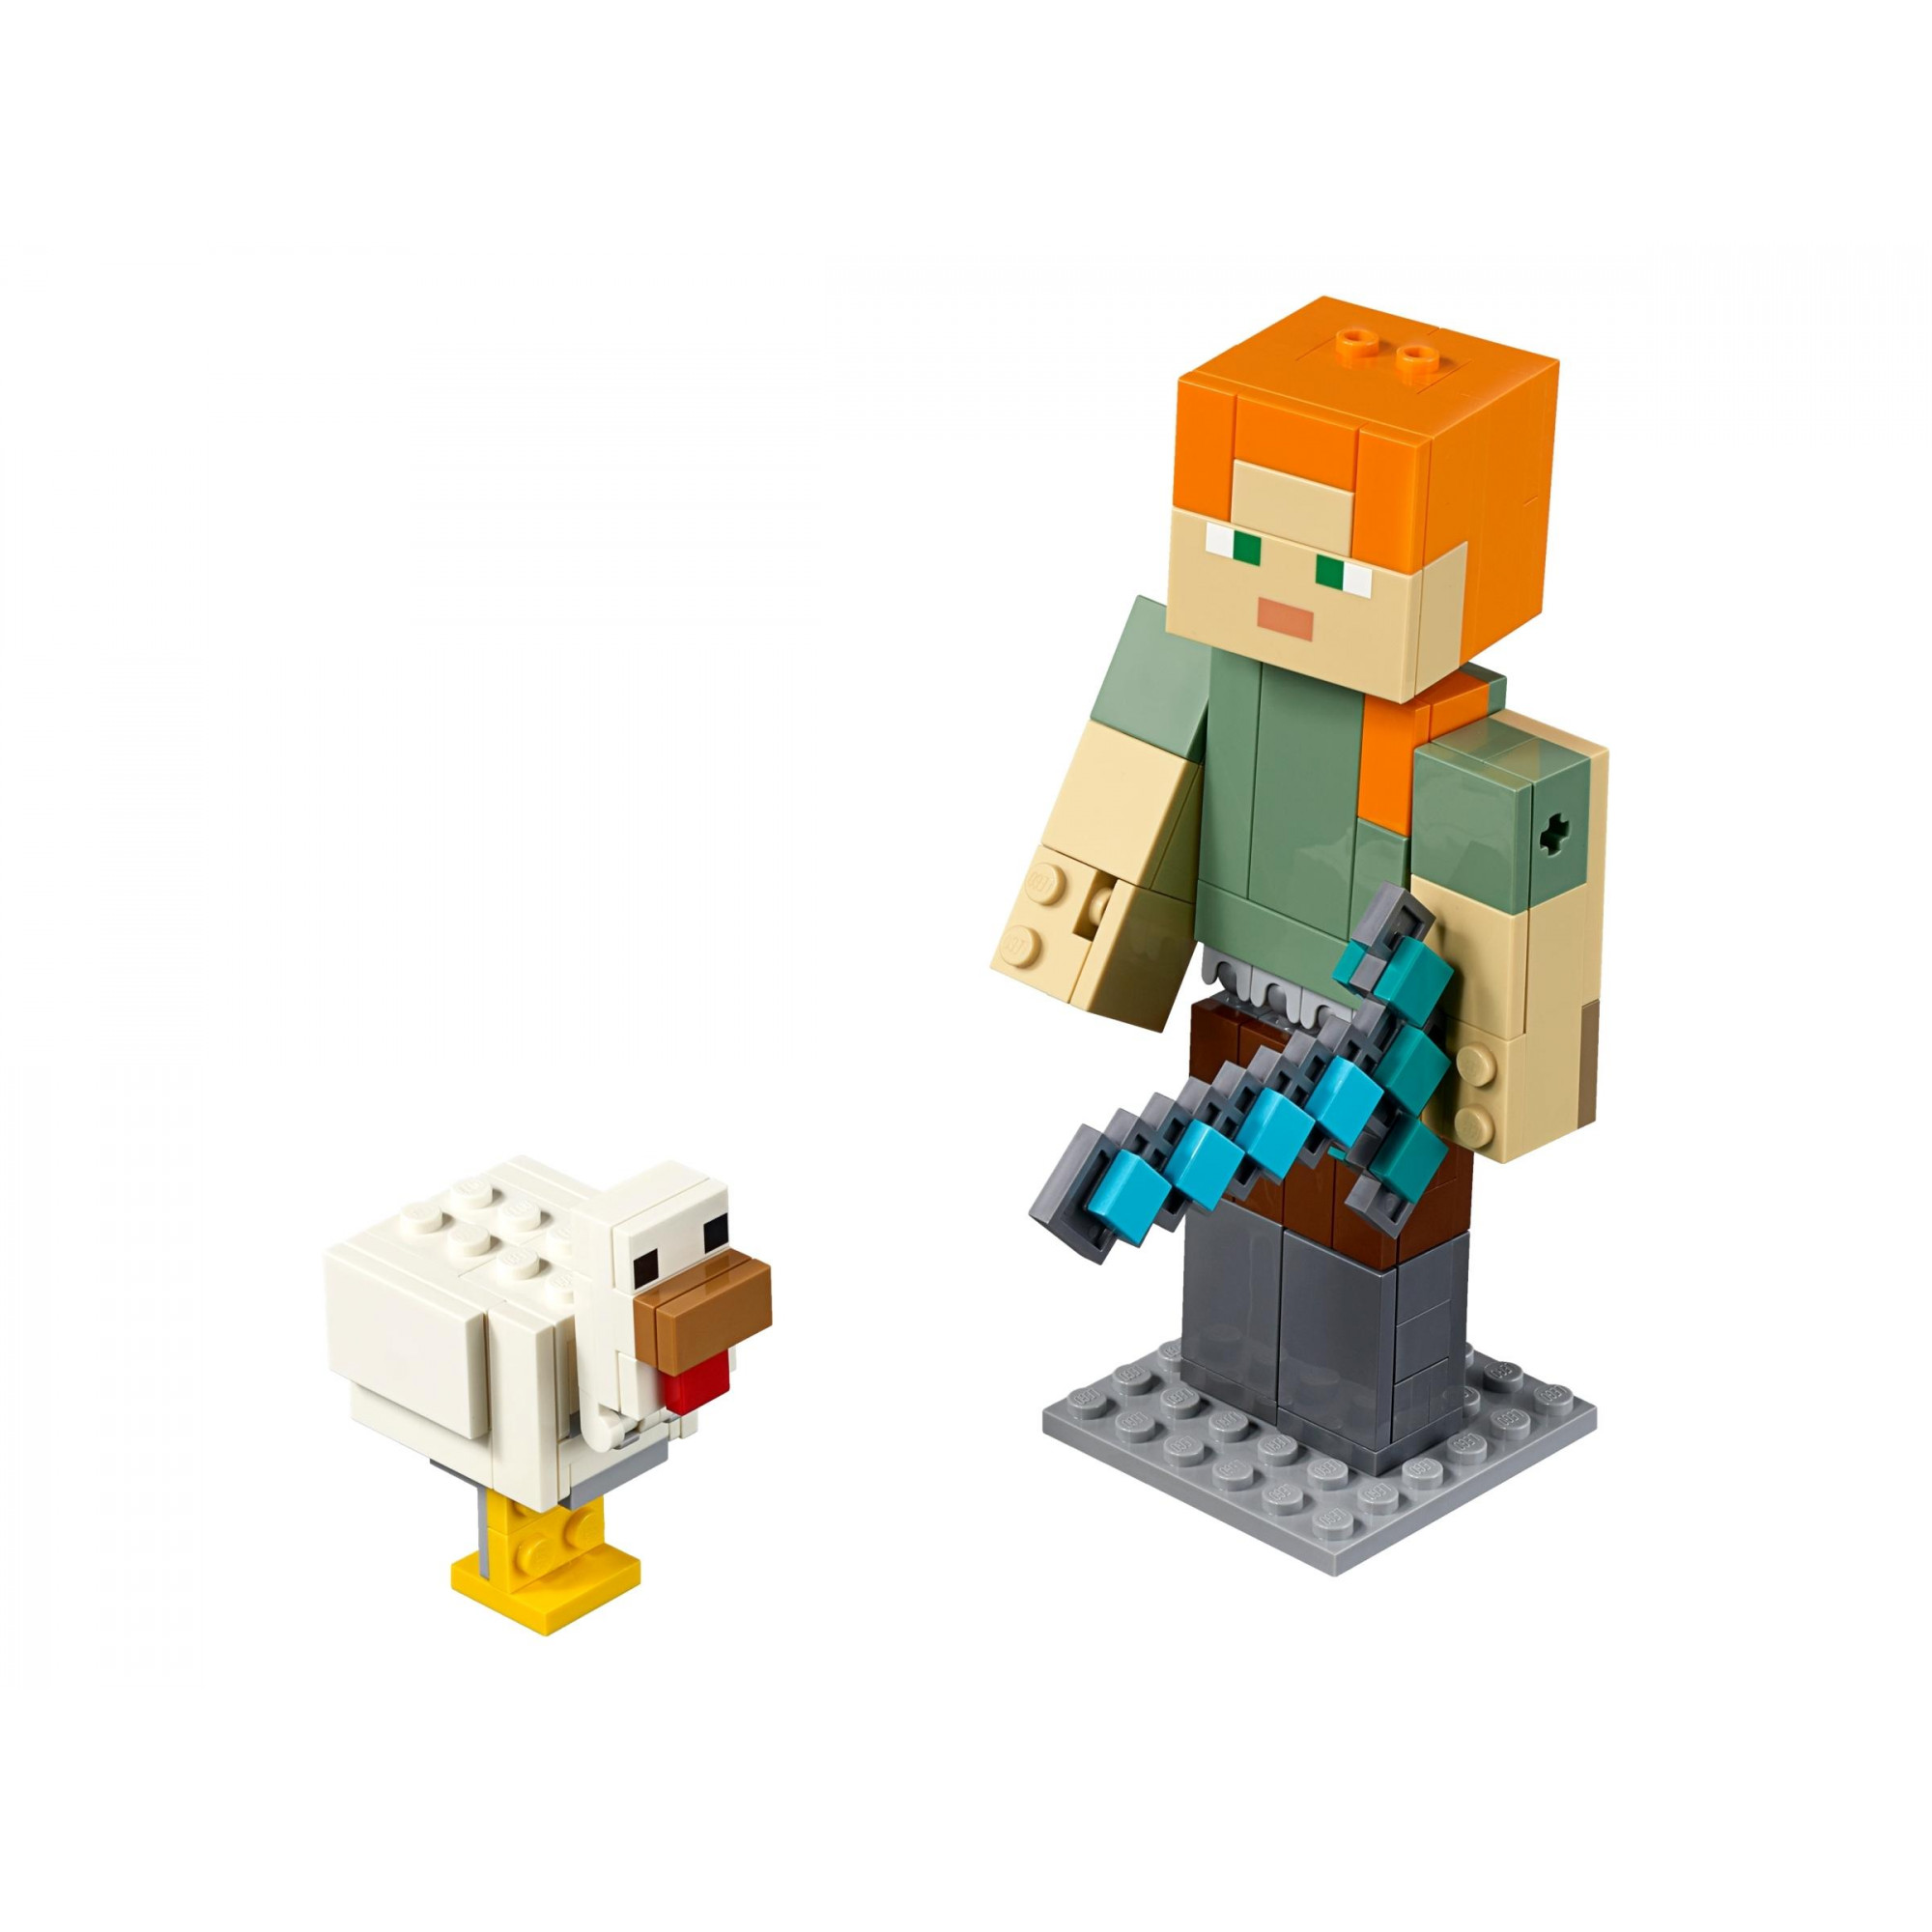 LEGO Minecraft Алекс с цыпленком (21149) - зображення 1